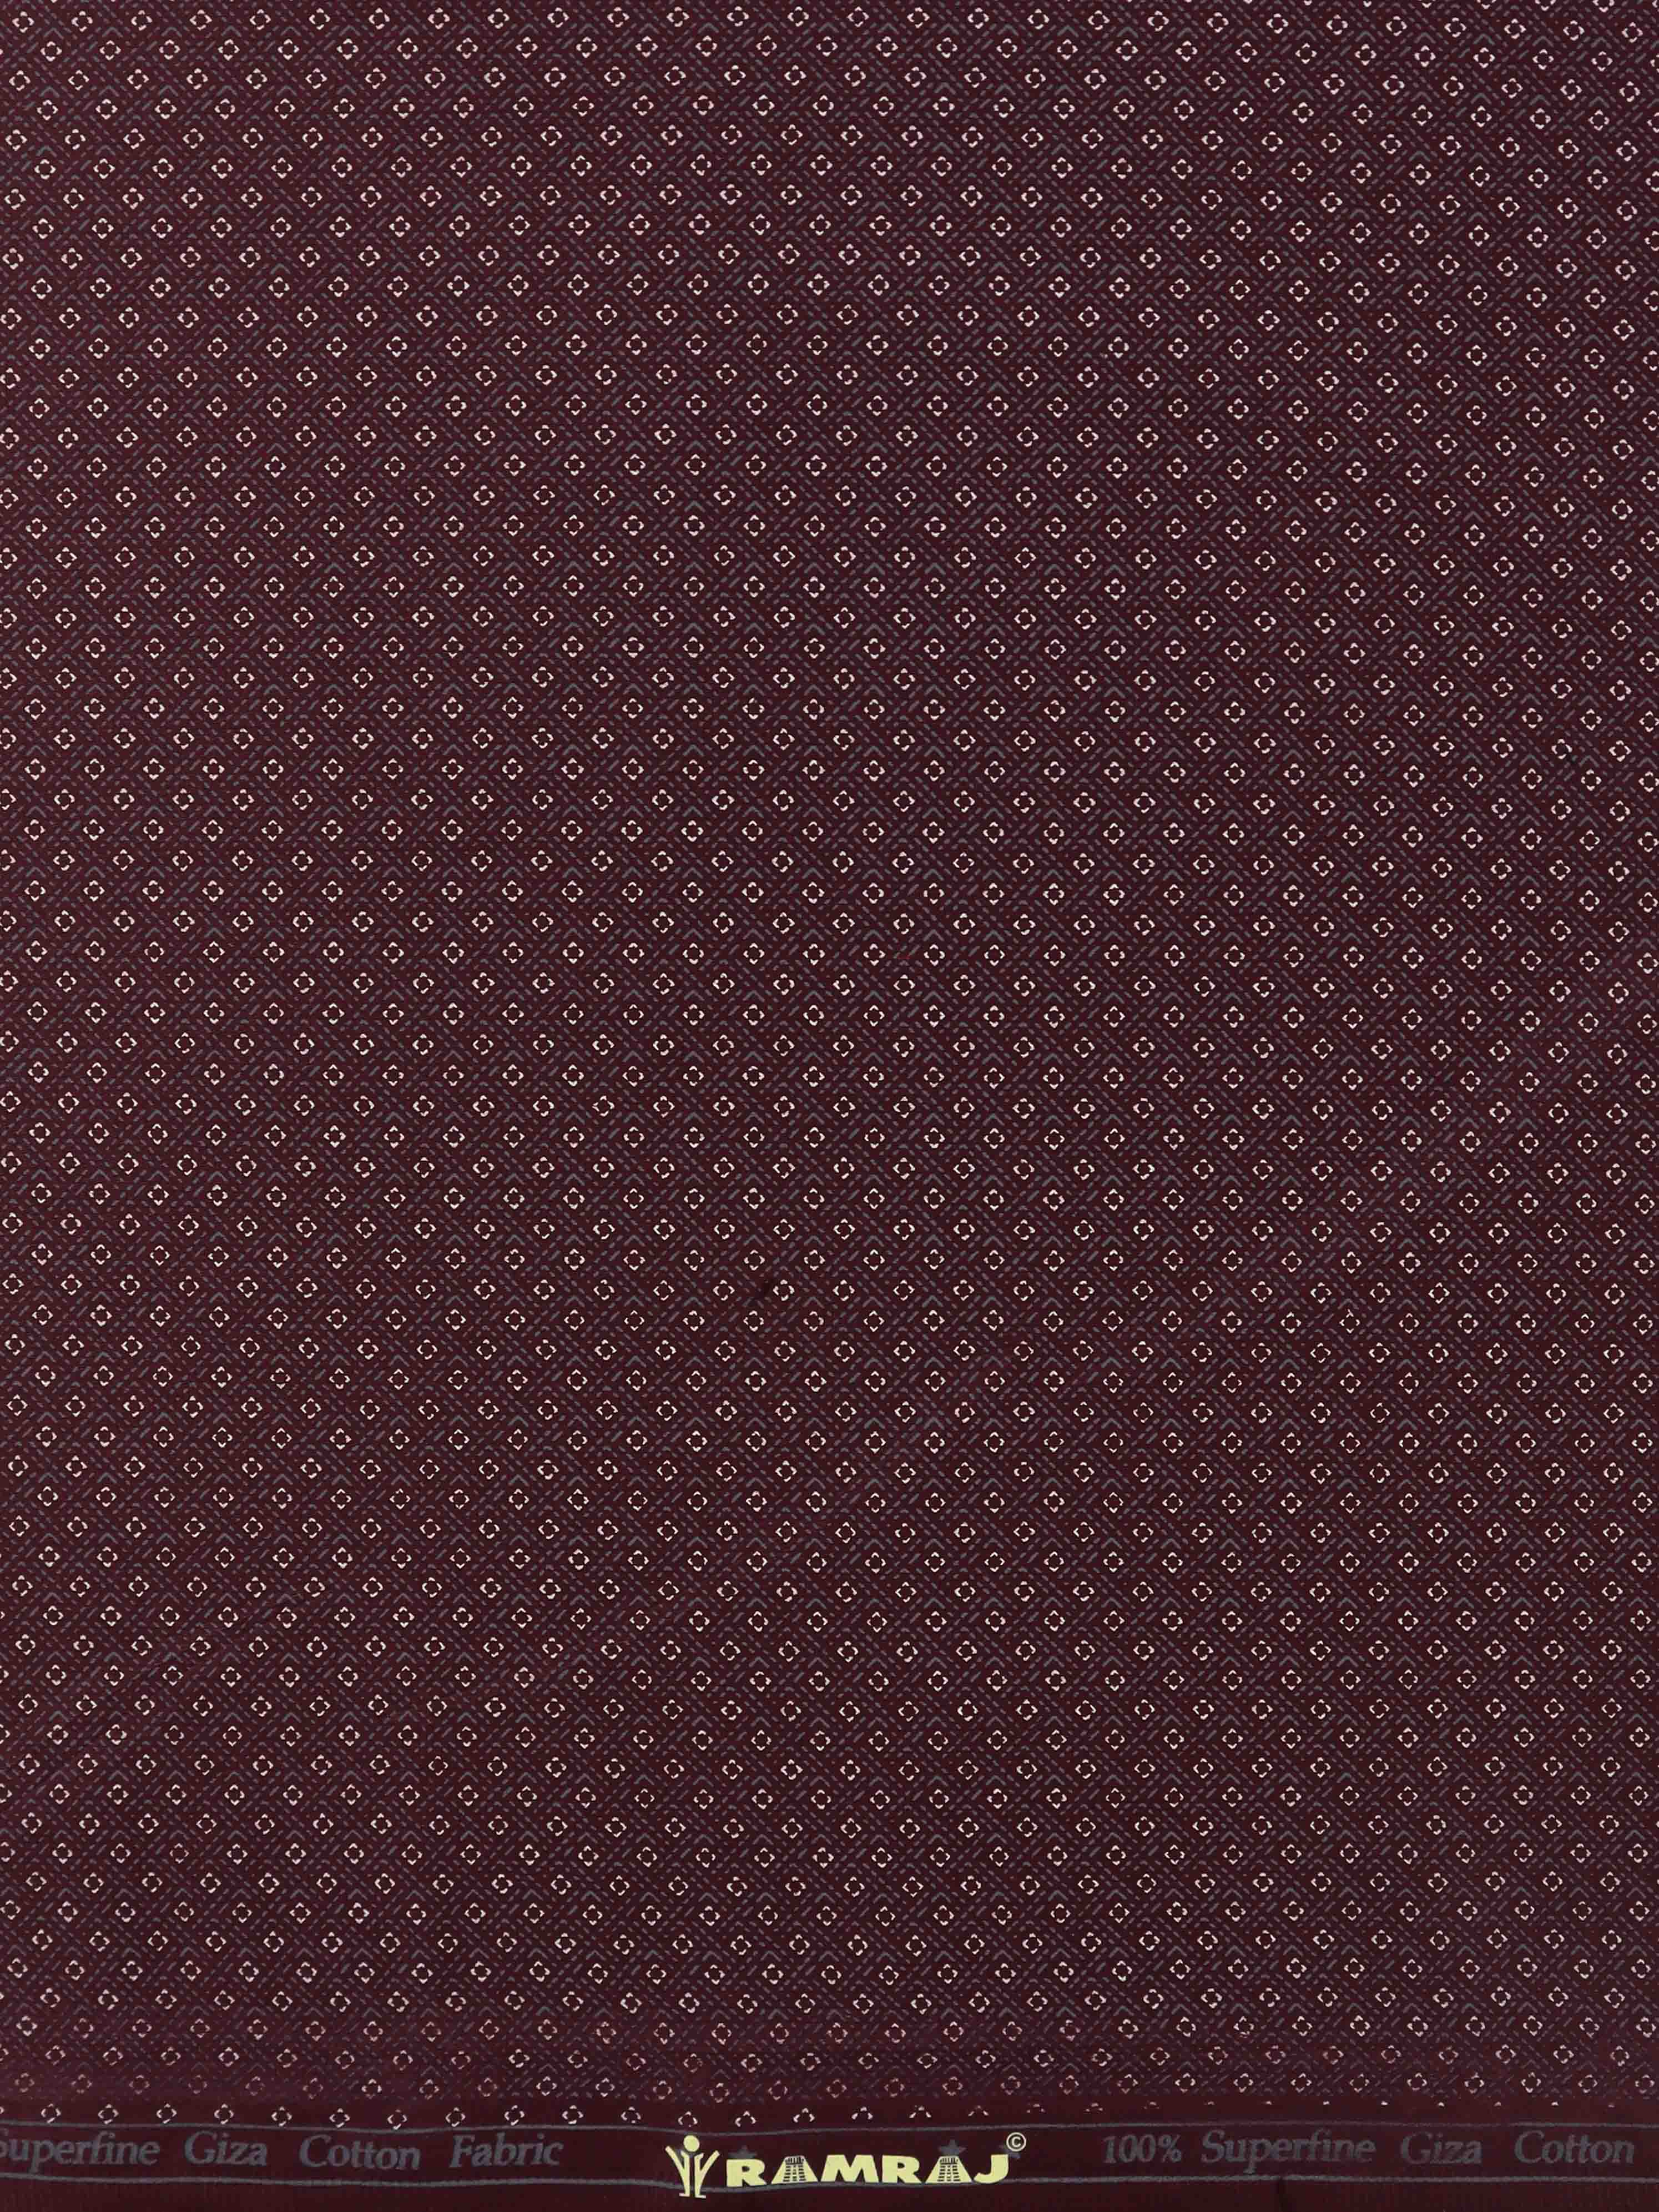 100% Superfine Giza Cotton Purple Printed Shirt Fabric OSLO